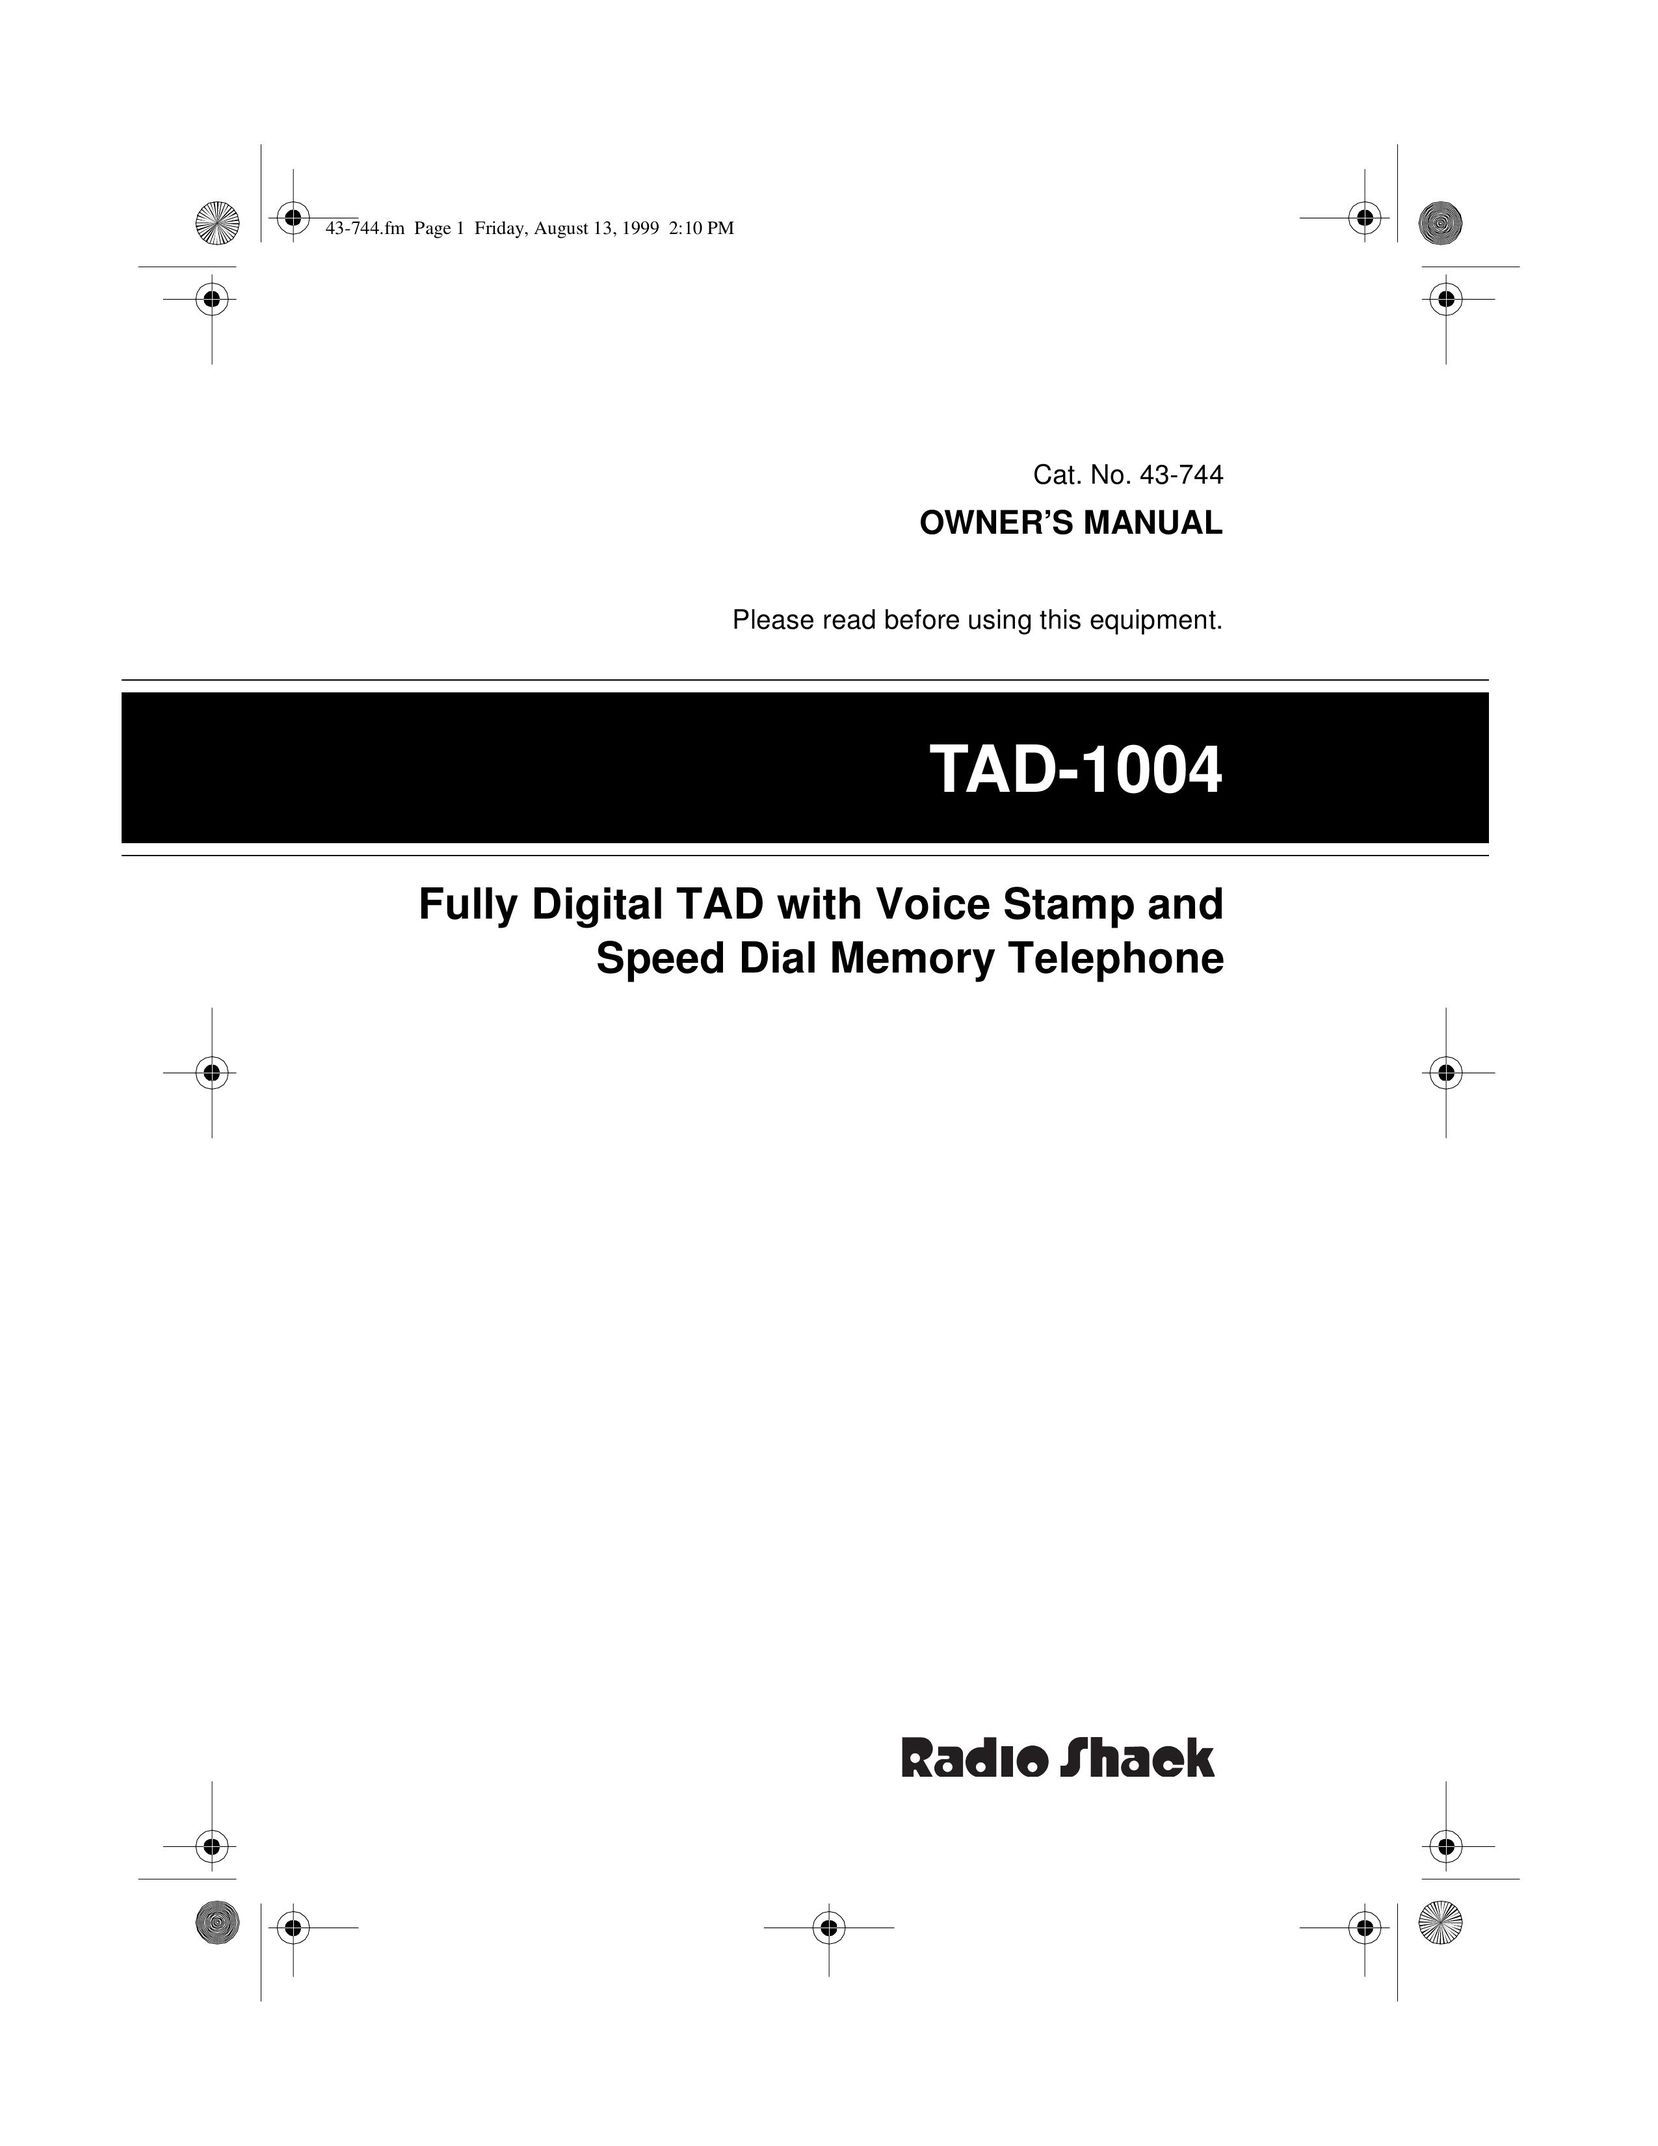 Radio Shack TAD-1004 Telephone User Manual